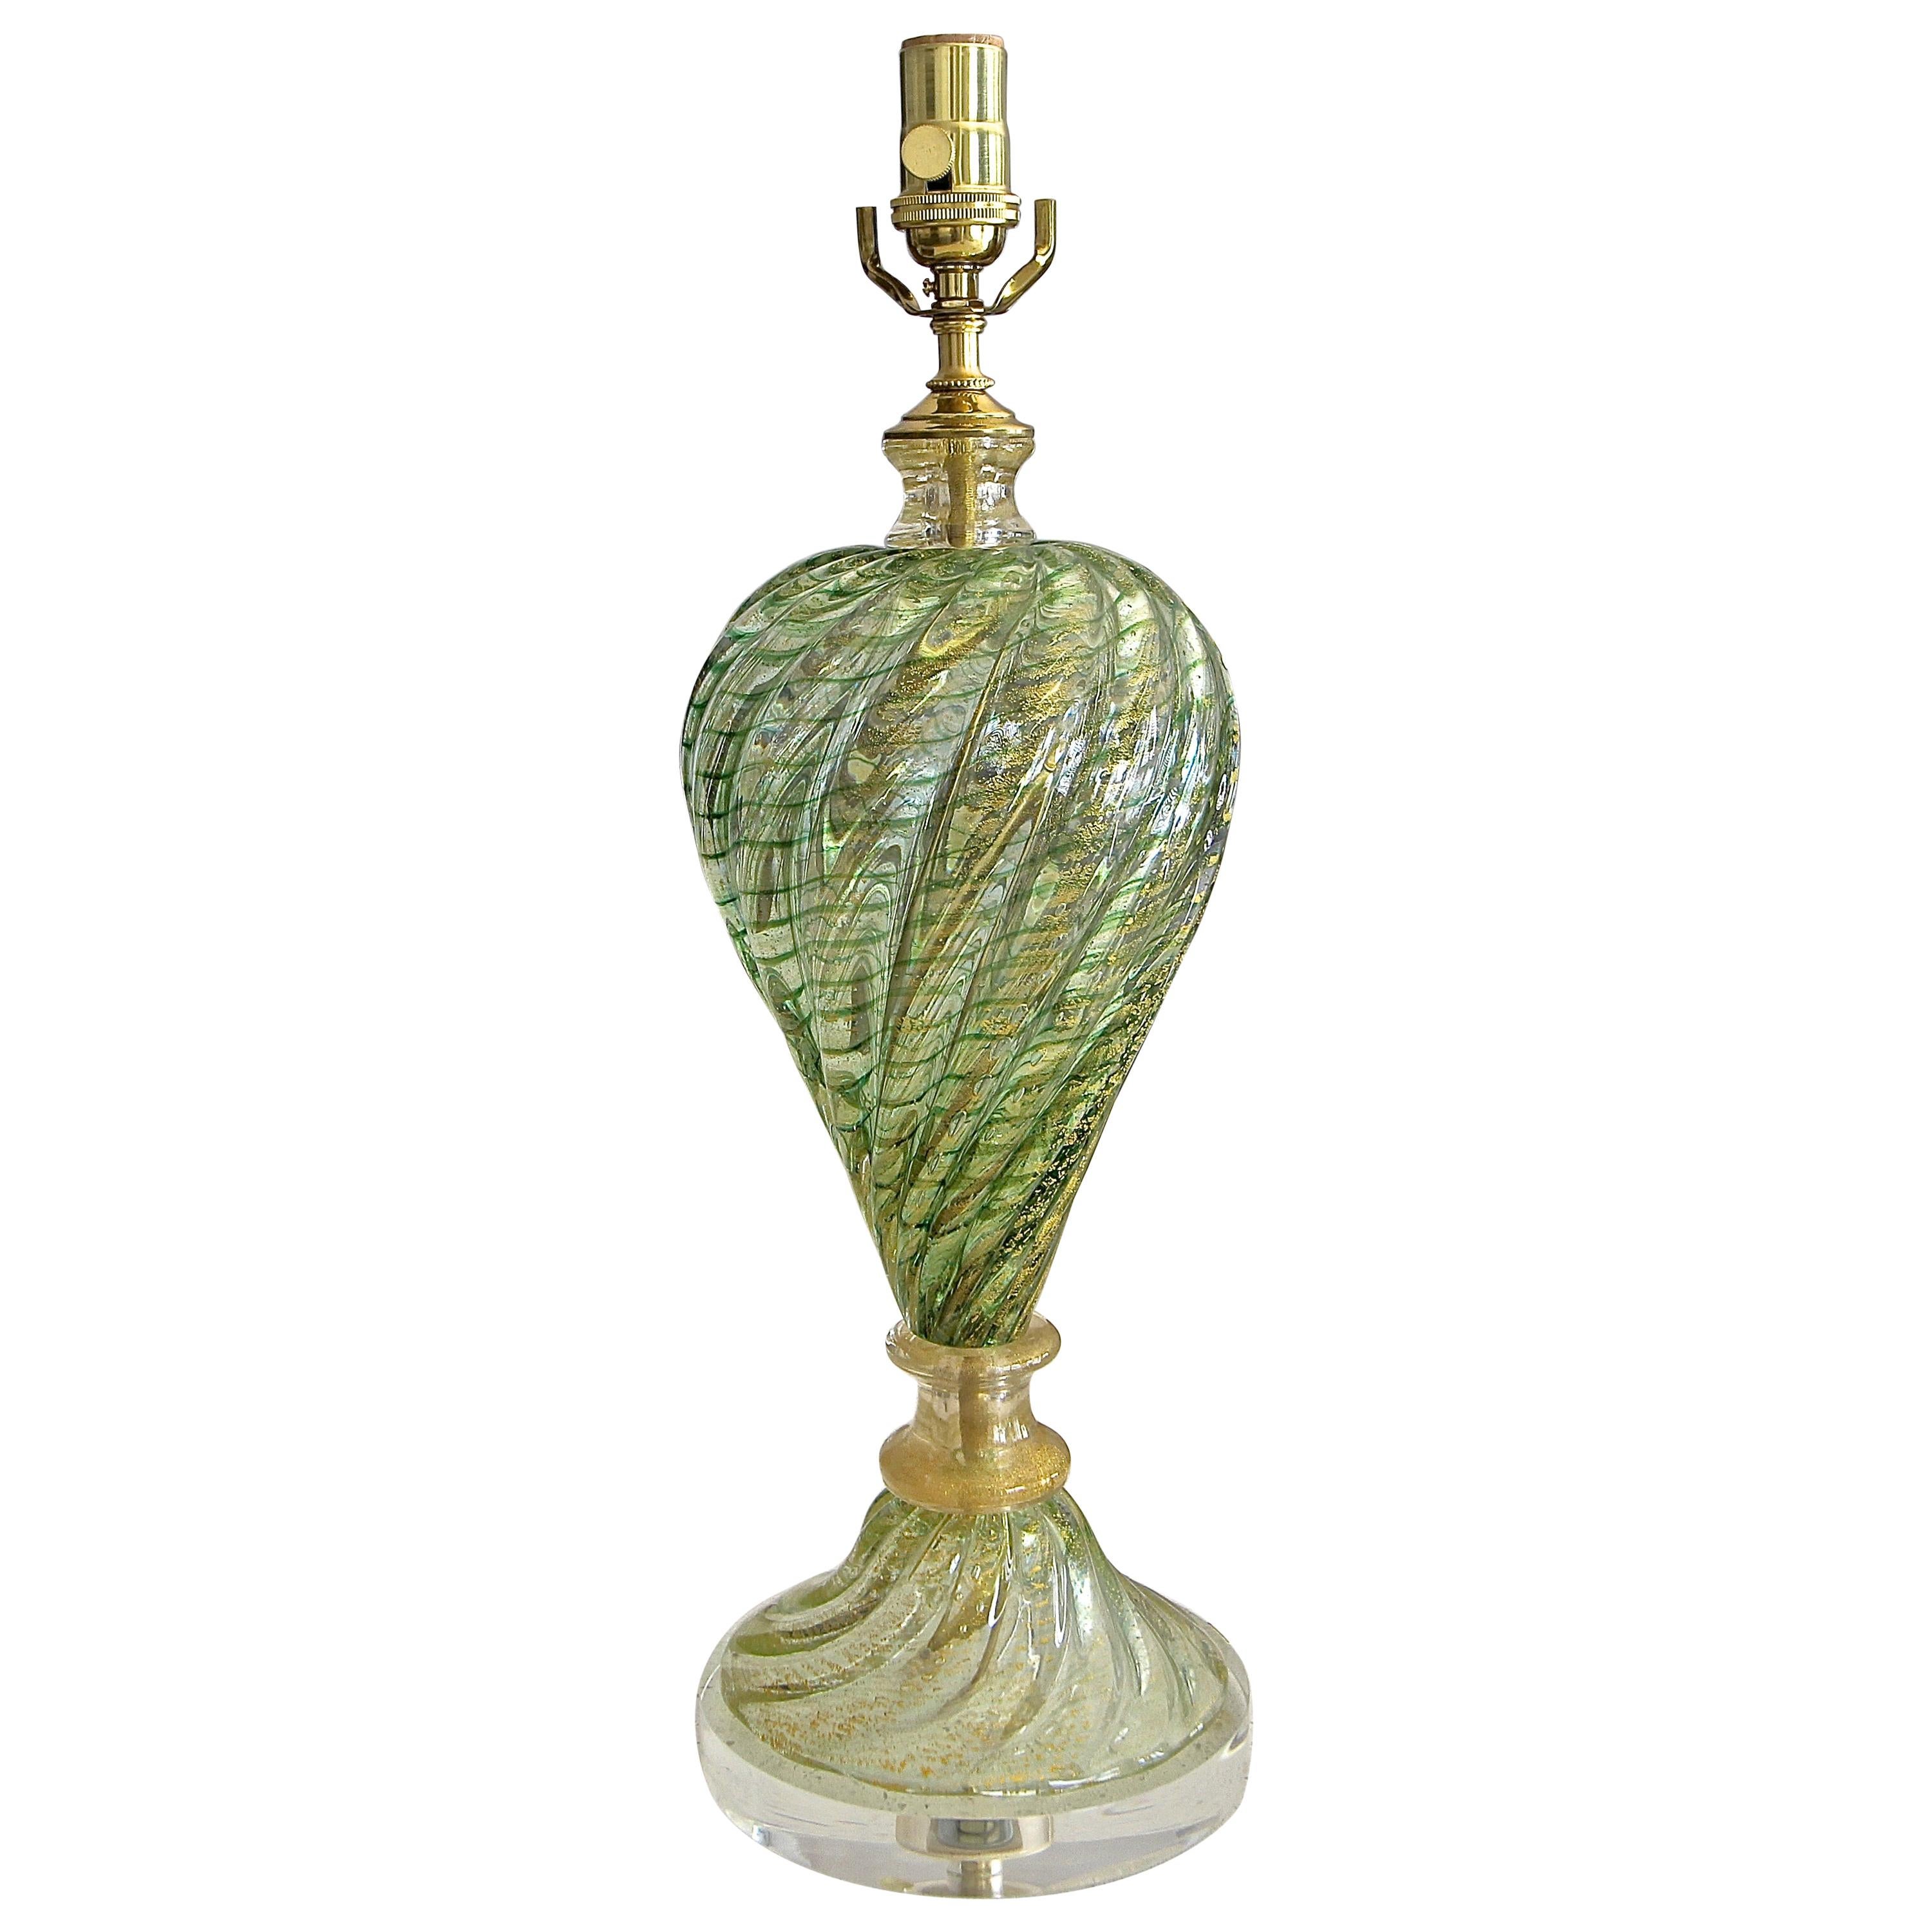 Single Green and Gold Italian Murano Barovier Glass Table Lamp